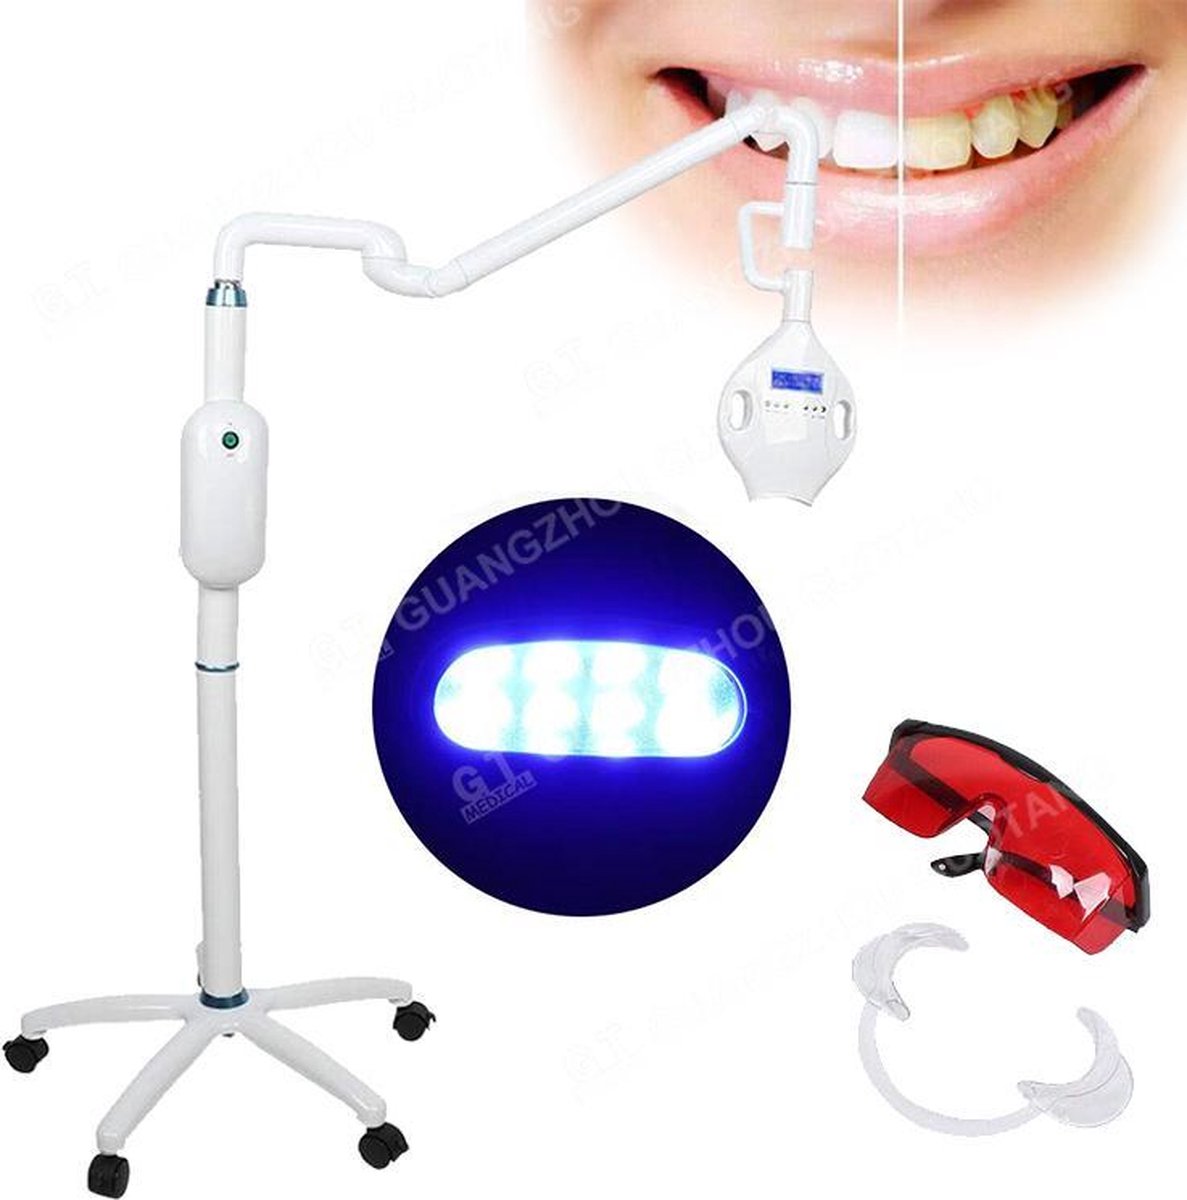 Tanden Bleeklamp Profi 1 - Tandenbleeklamp - Tandenbleek Lamp LED - Tanden Bleeklamp - Pro 1 bleeklamp - tandenbleeklamp pro - Tandenbleeklamp Premium pro